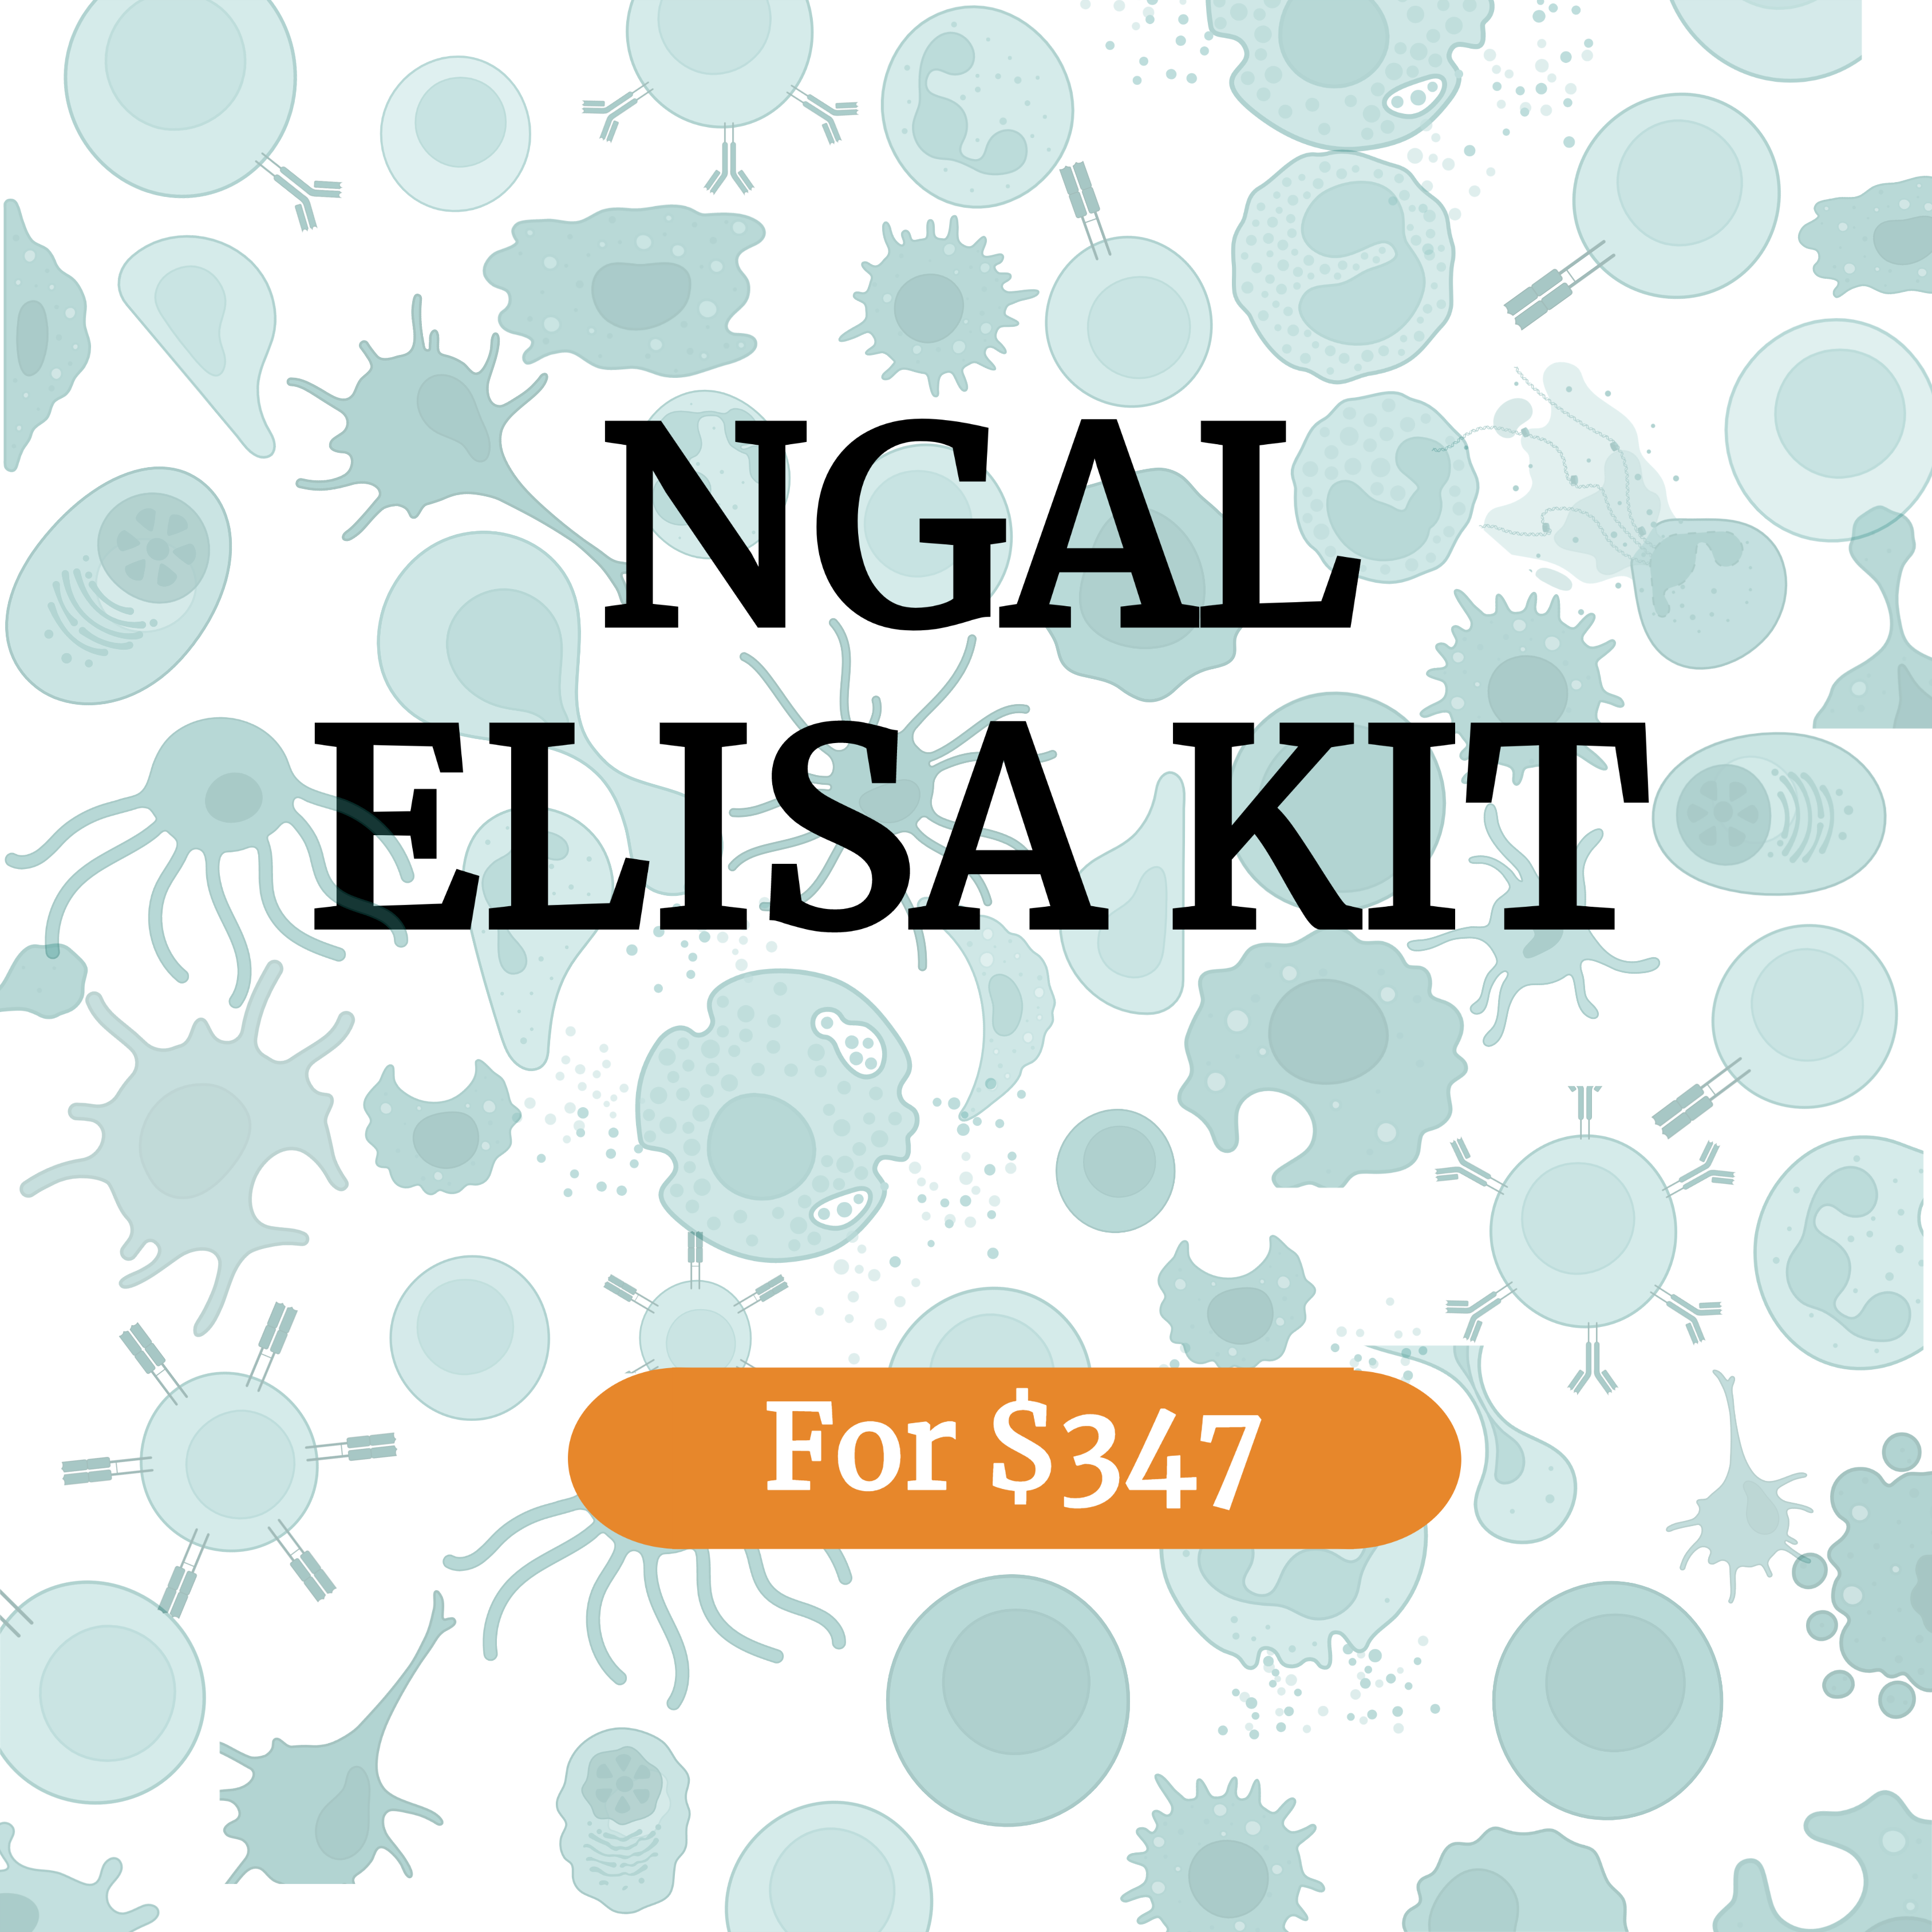 NGAL ELISA Kit